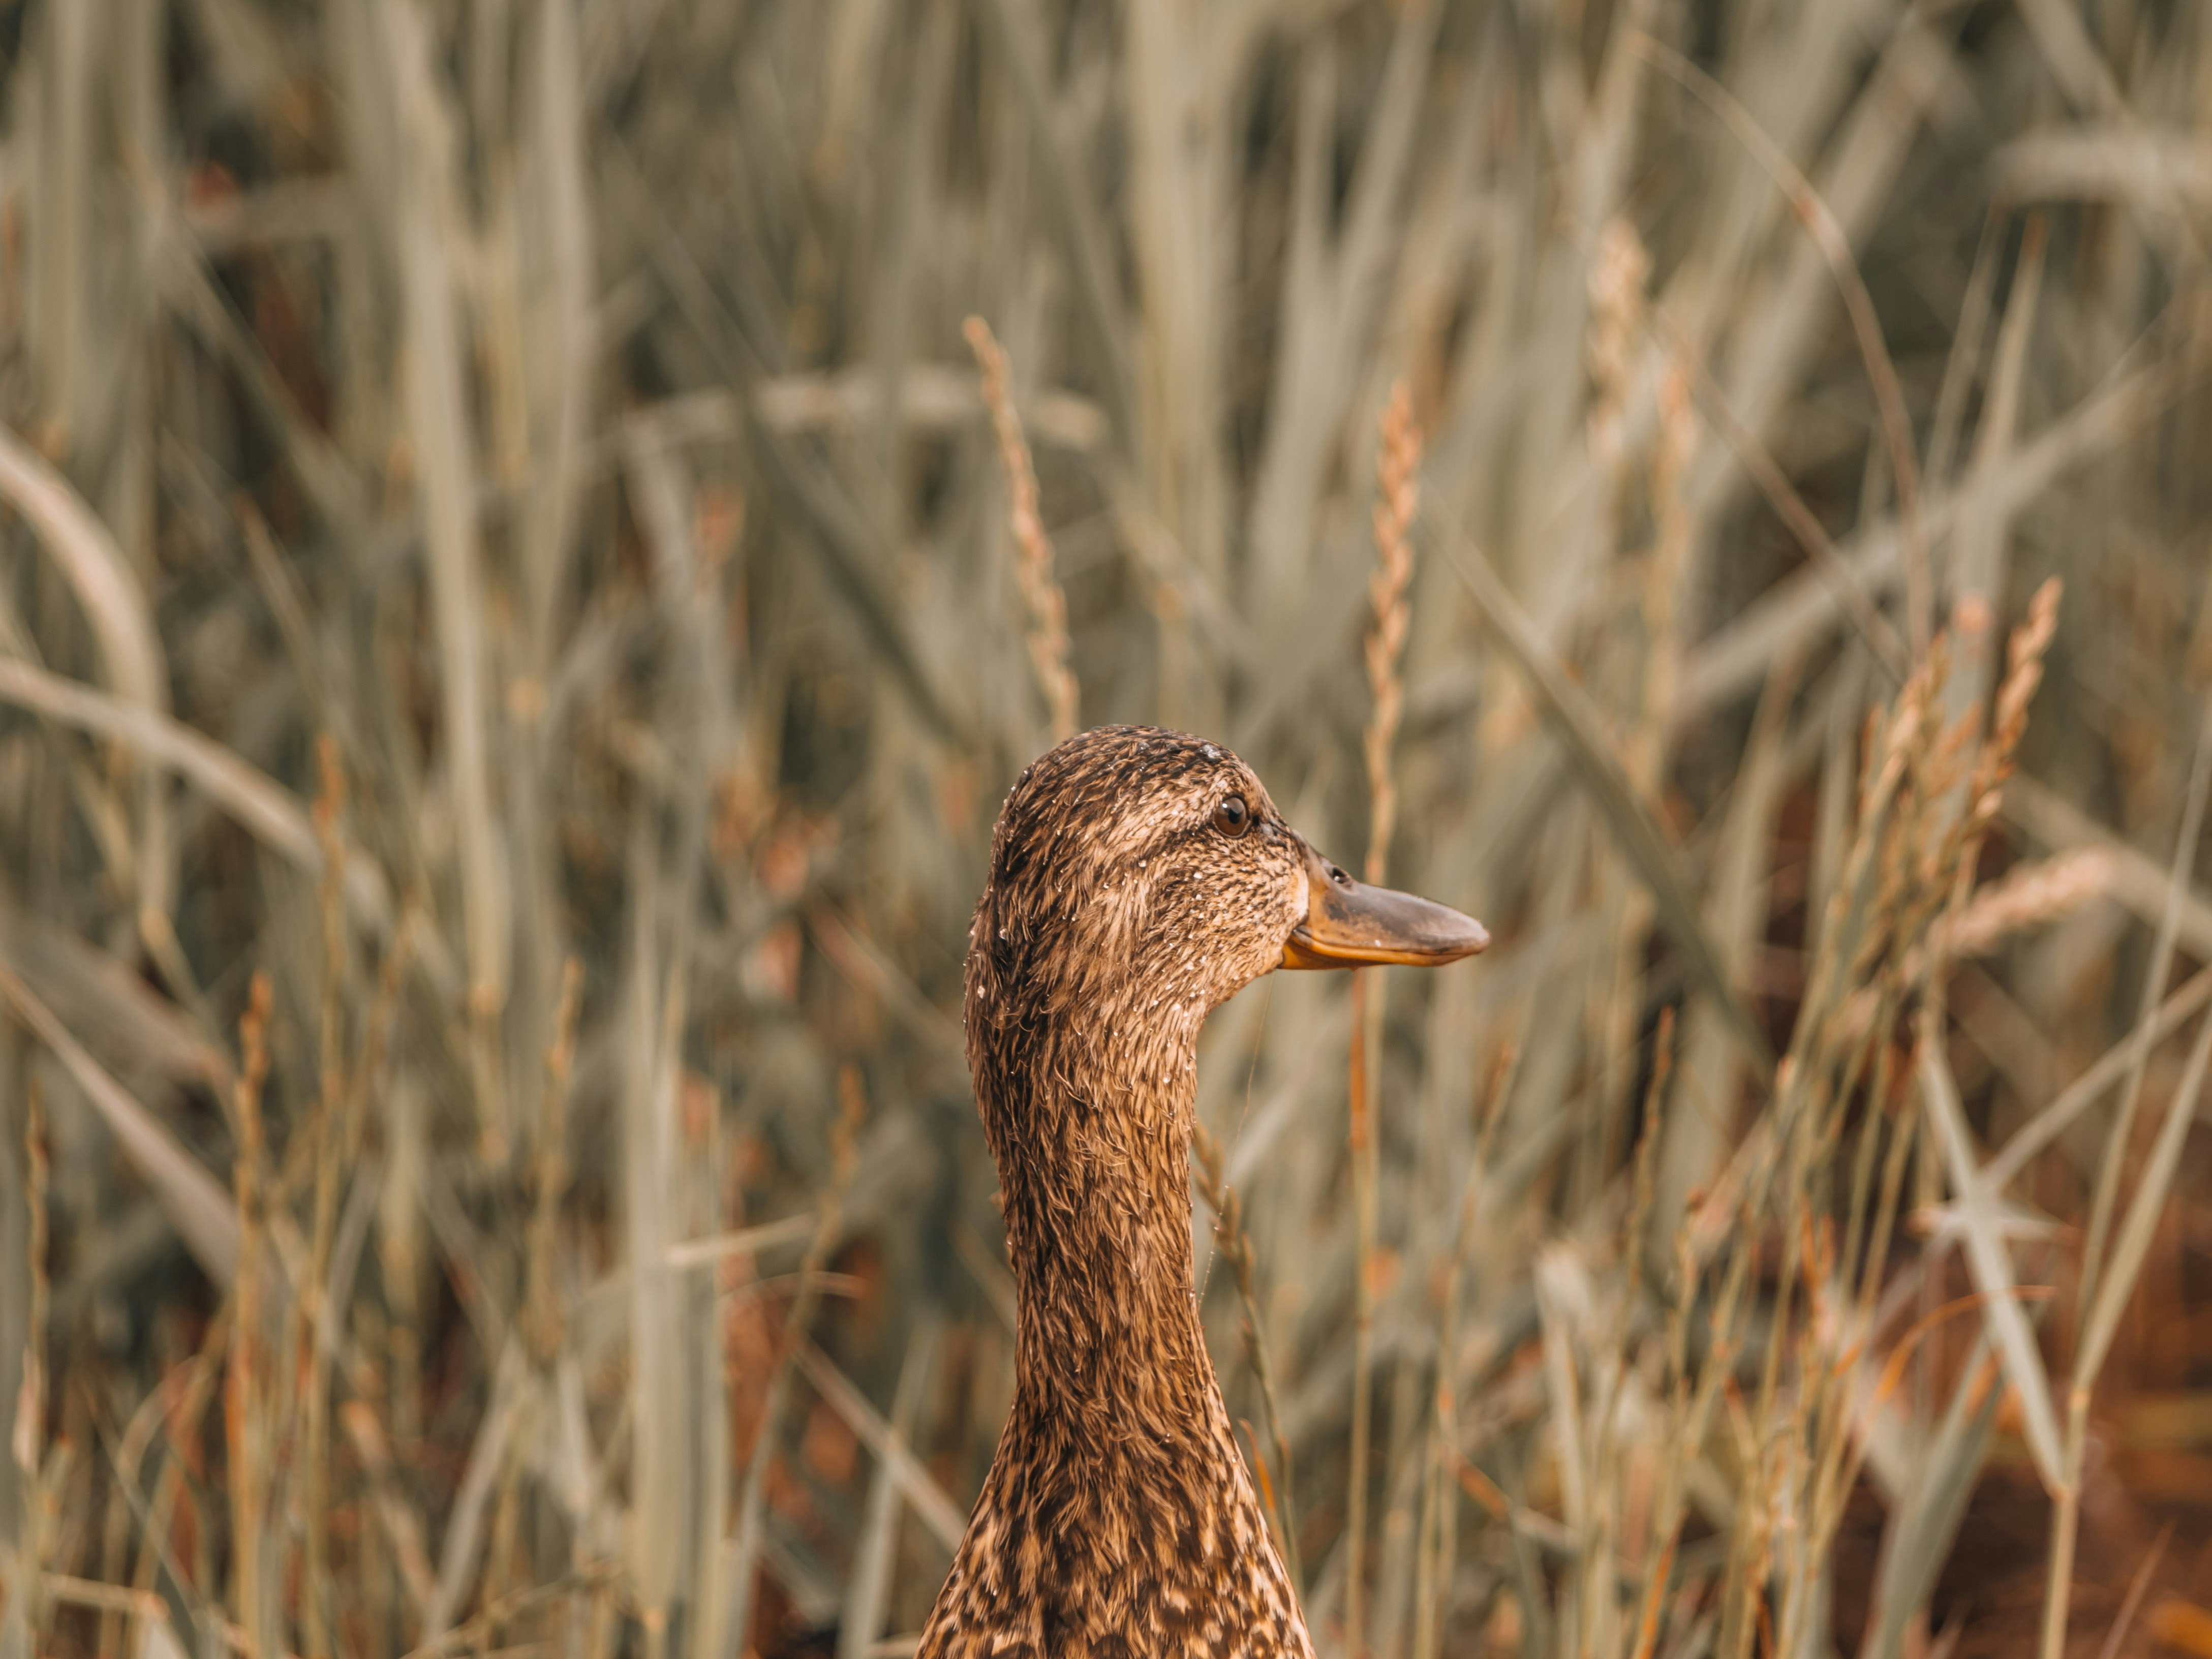 brown duck on brown grass field during daytime